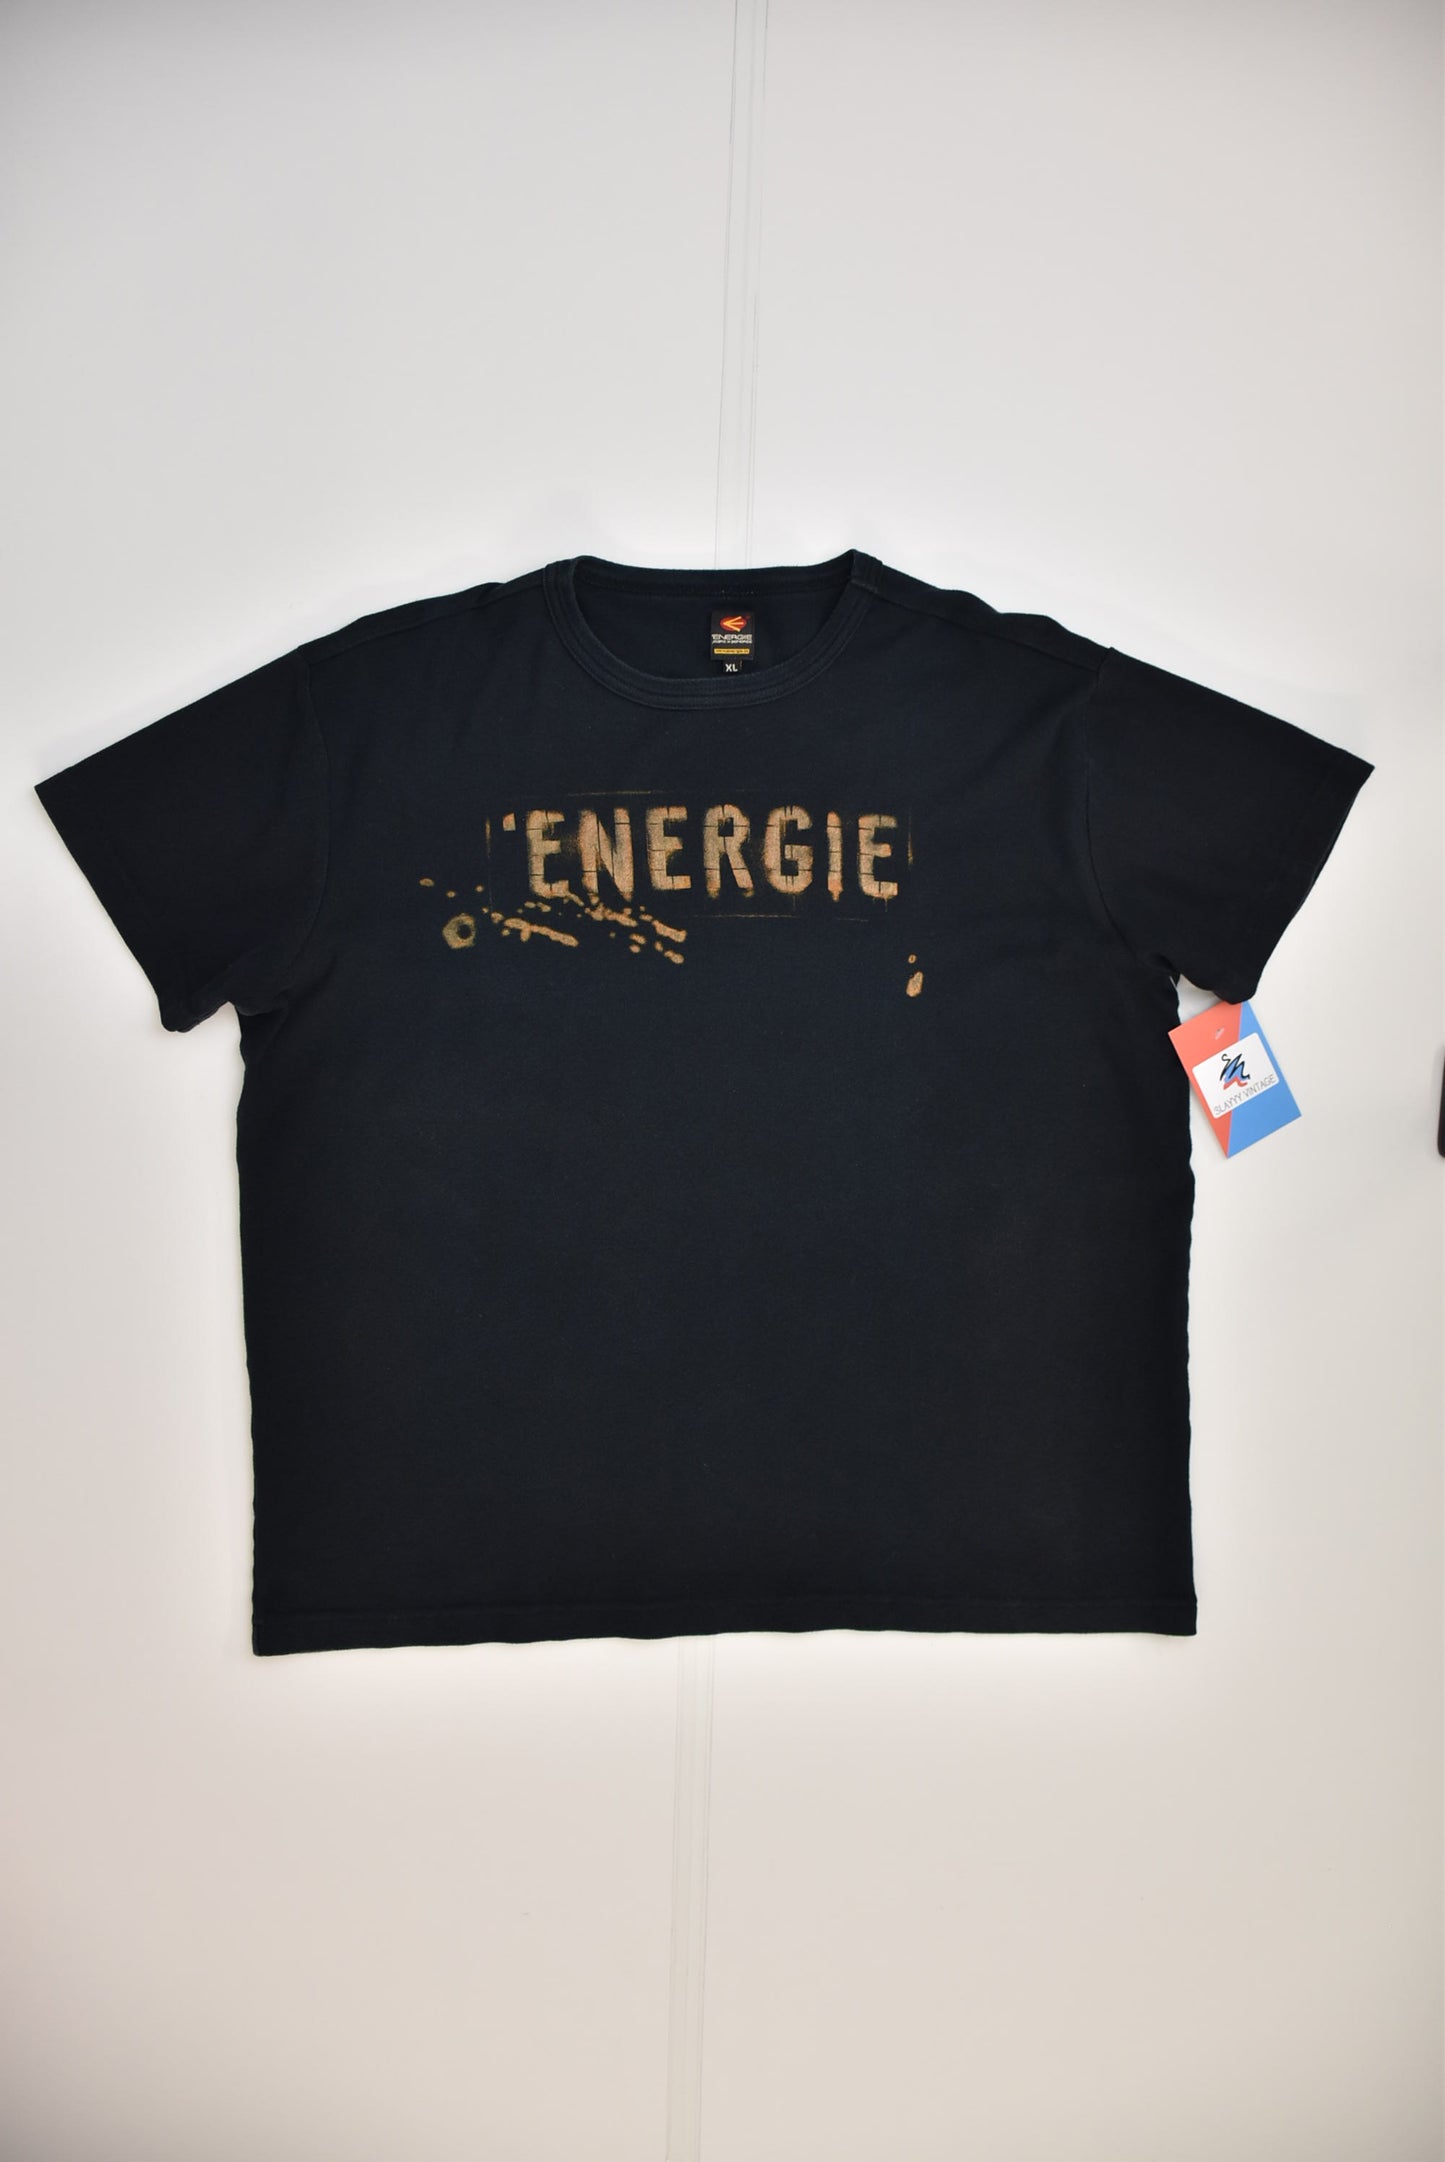 Energie T-shirt (Women's UK12/14)